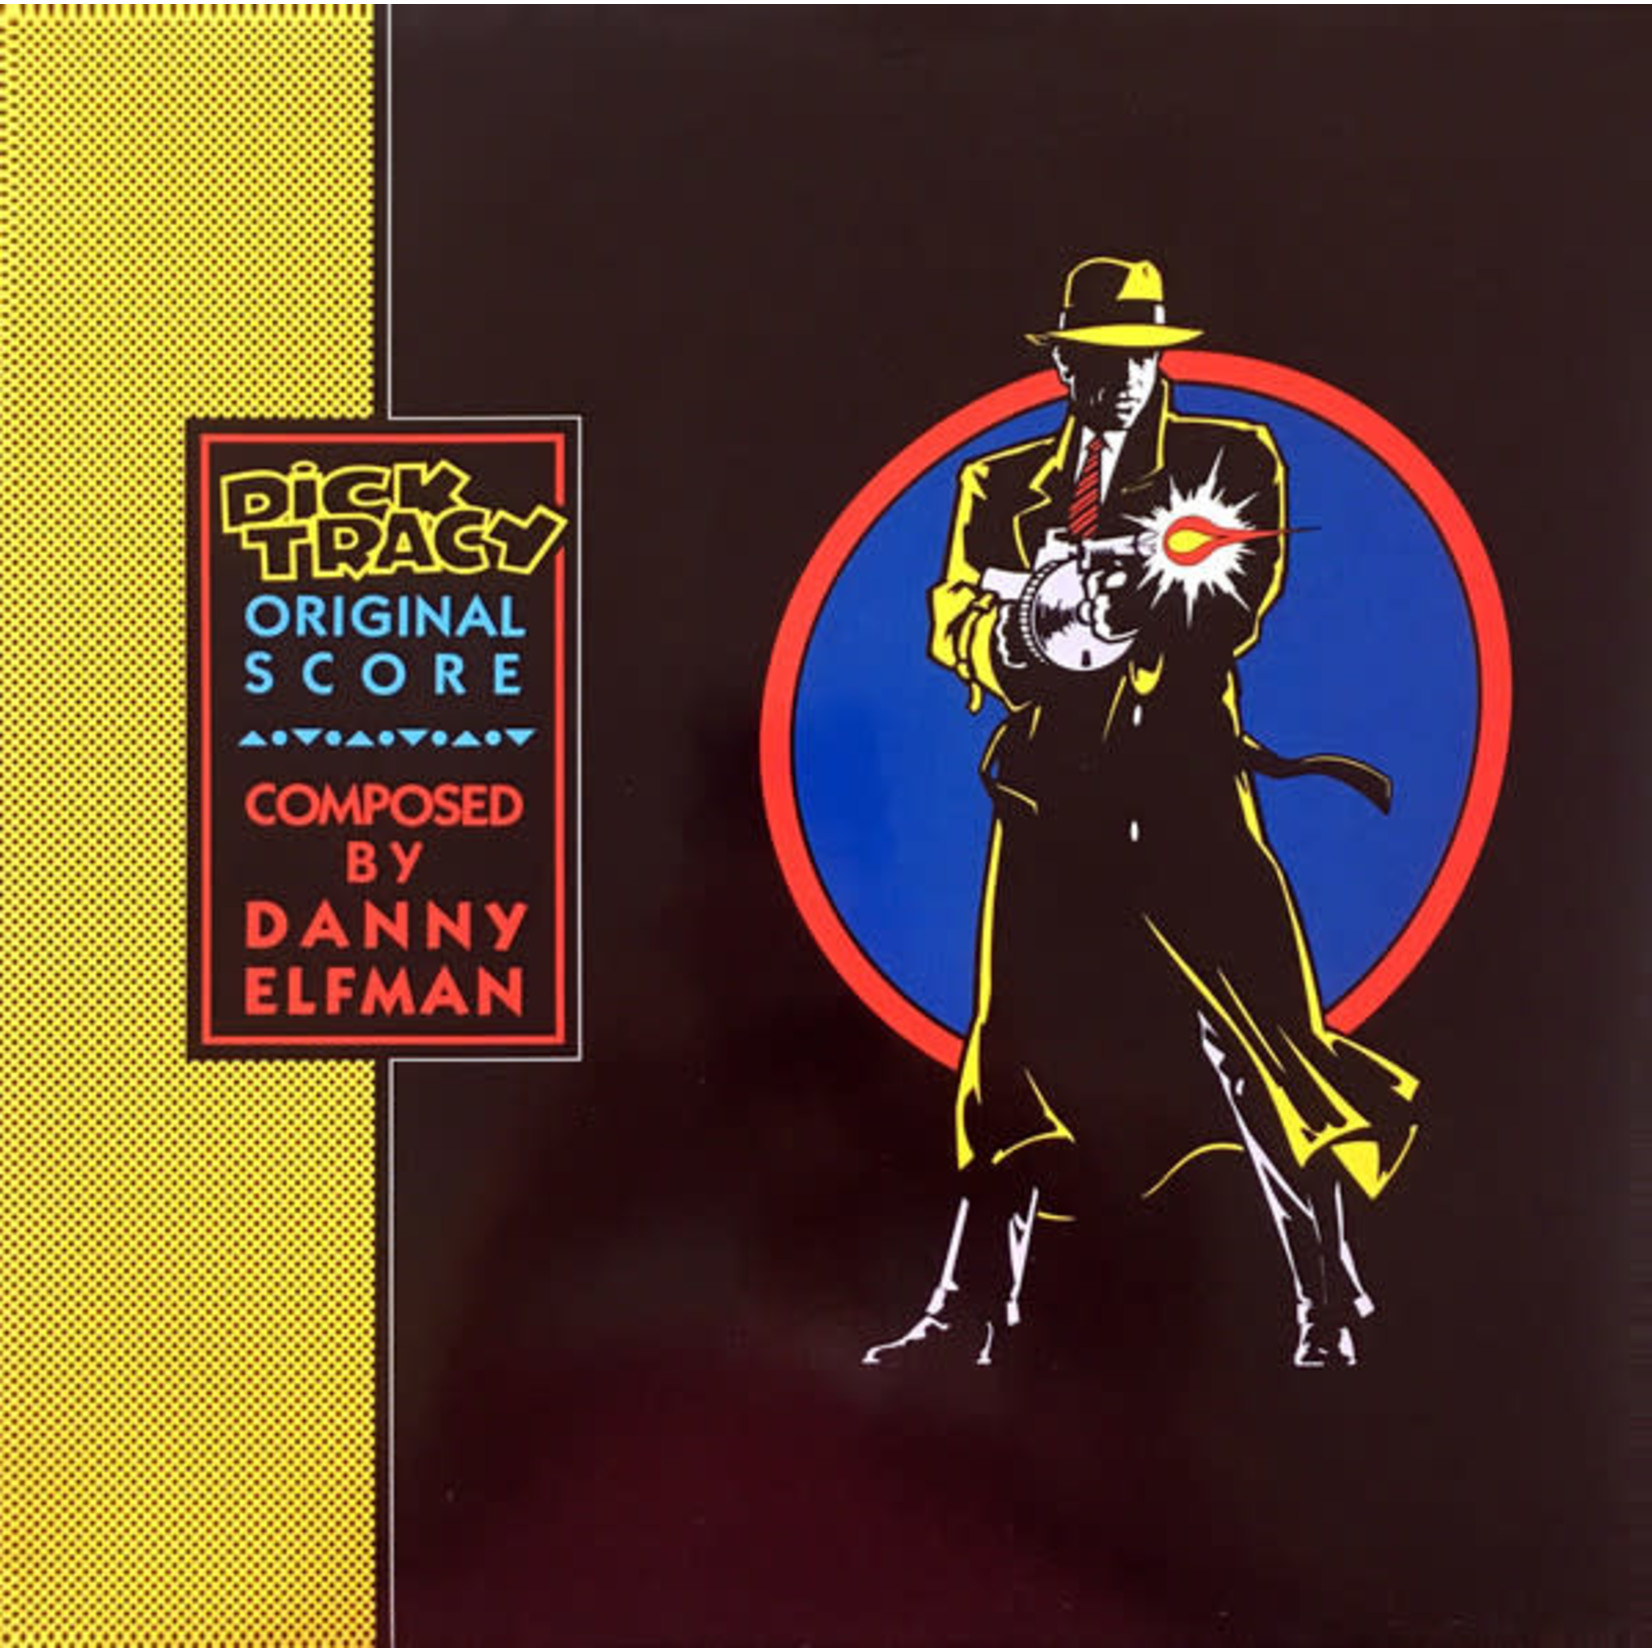 [New] Danny Elfman: Dick Tracy Original Score Composed by Danny Elfman (translucent cobalt blue vinyl) [RHINO]